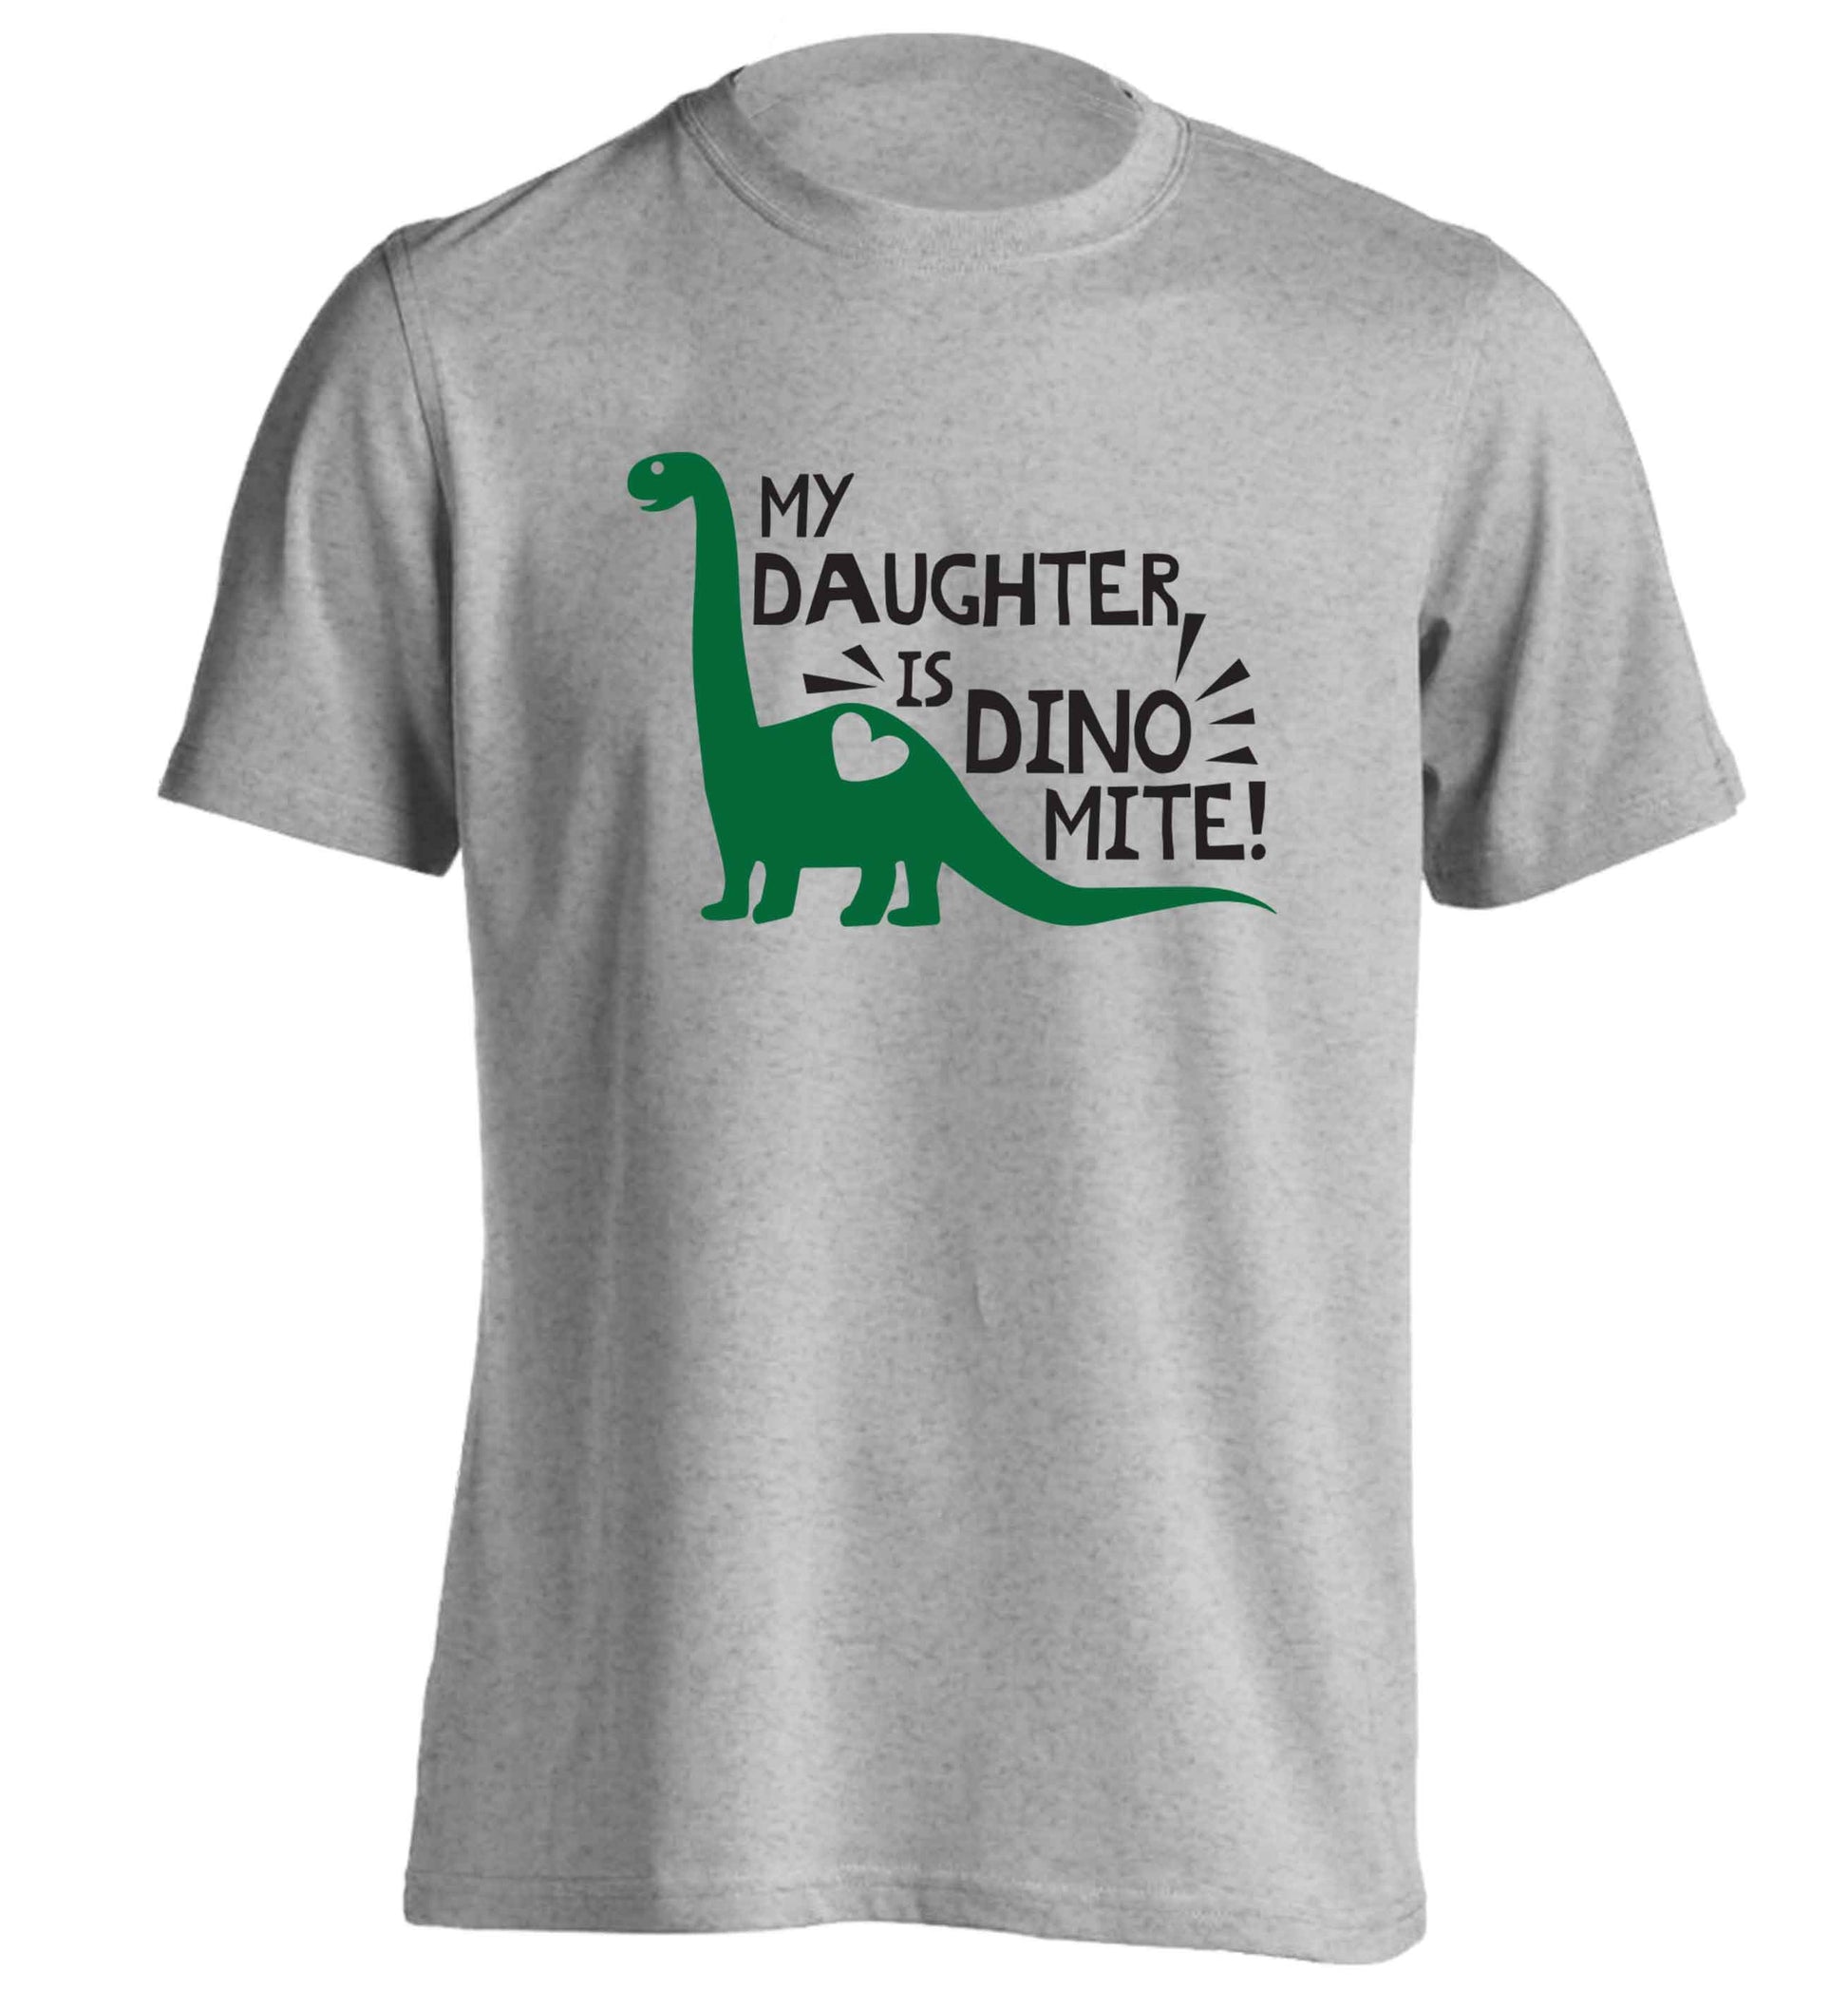 My daughter is dinomite! adults unisex grey Tshirt 2XL